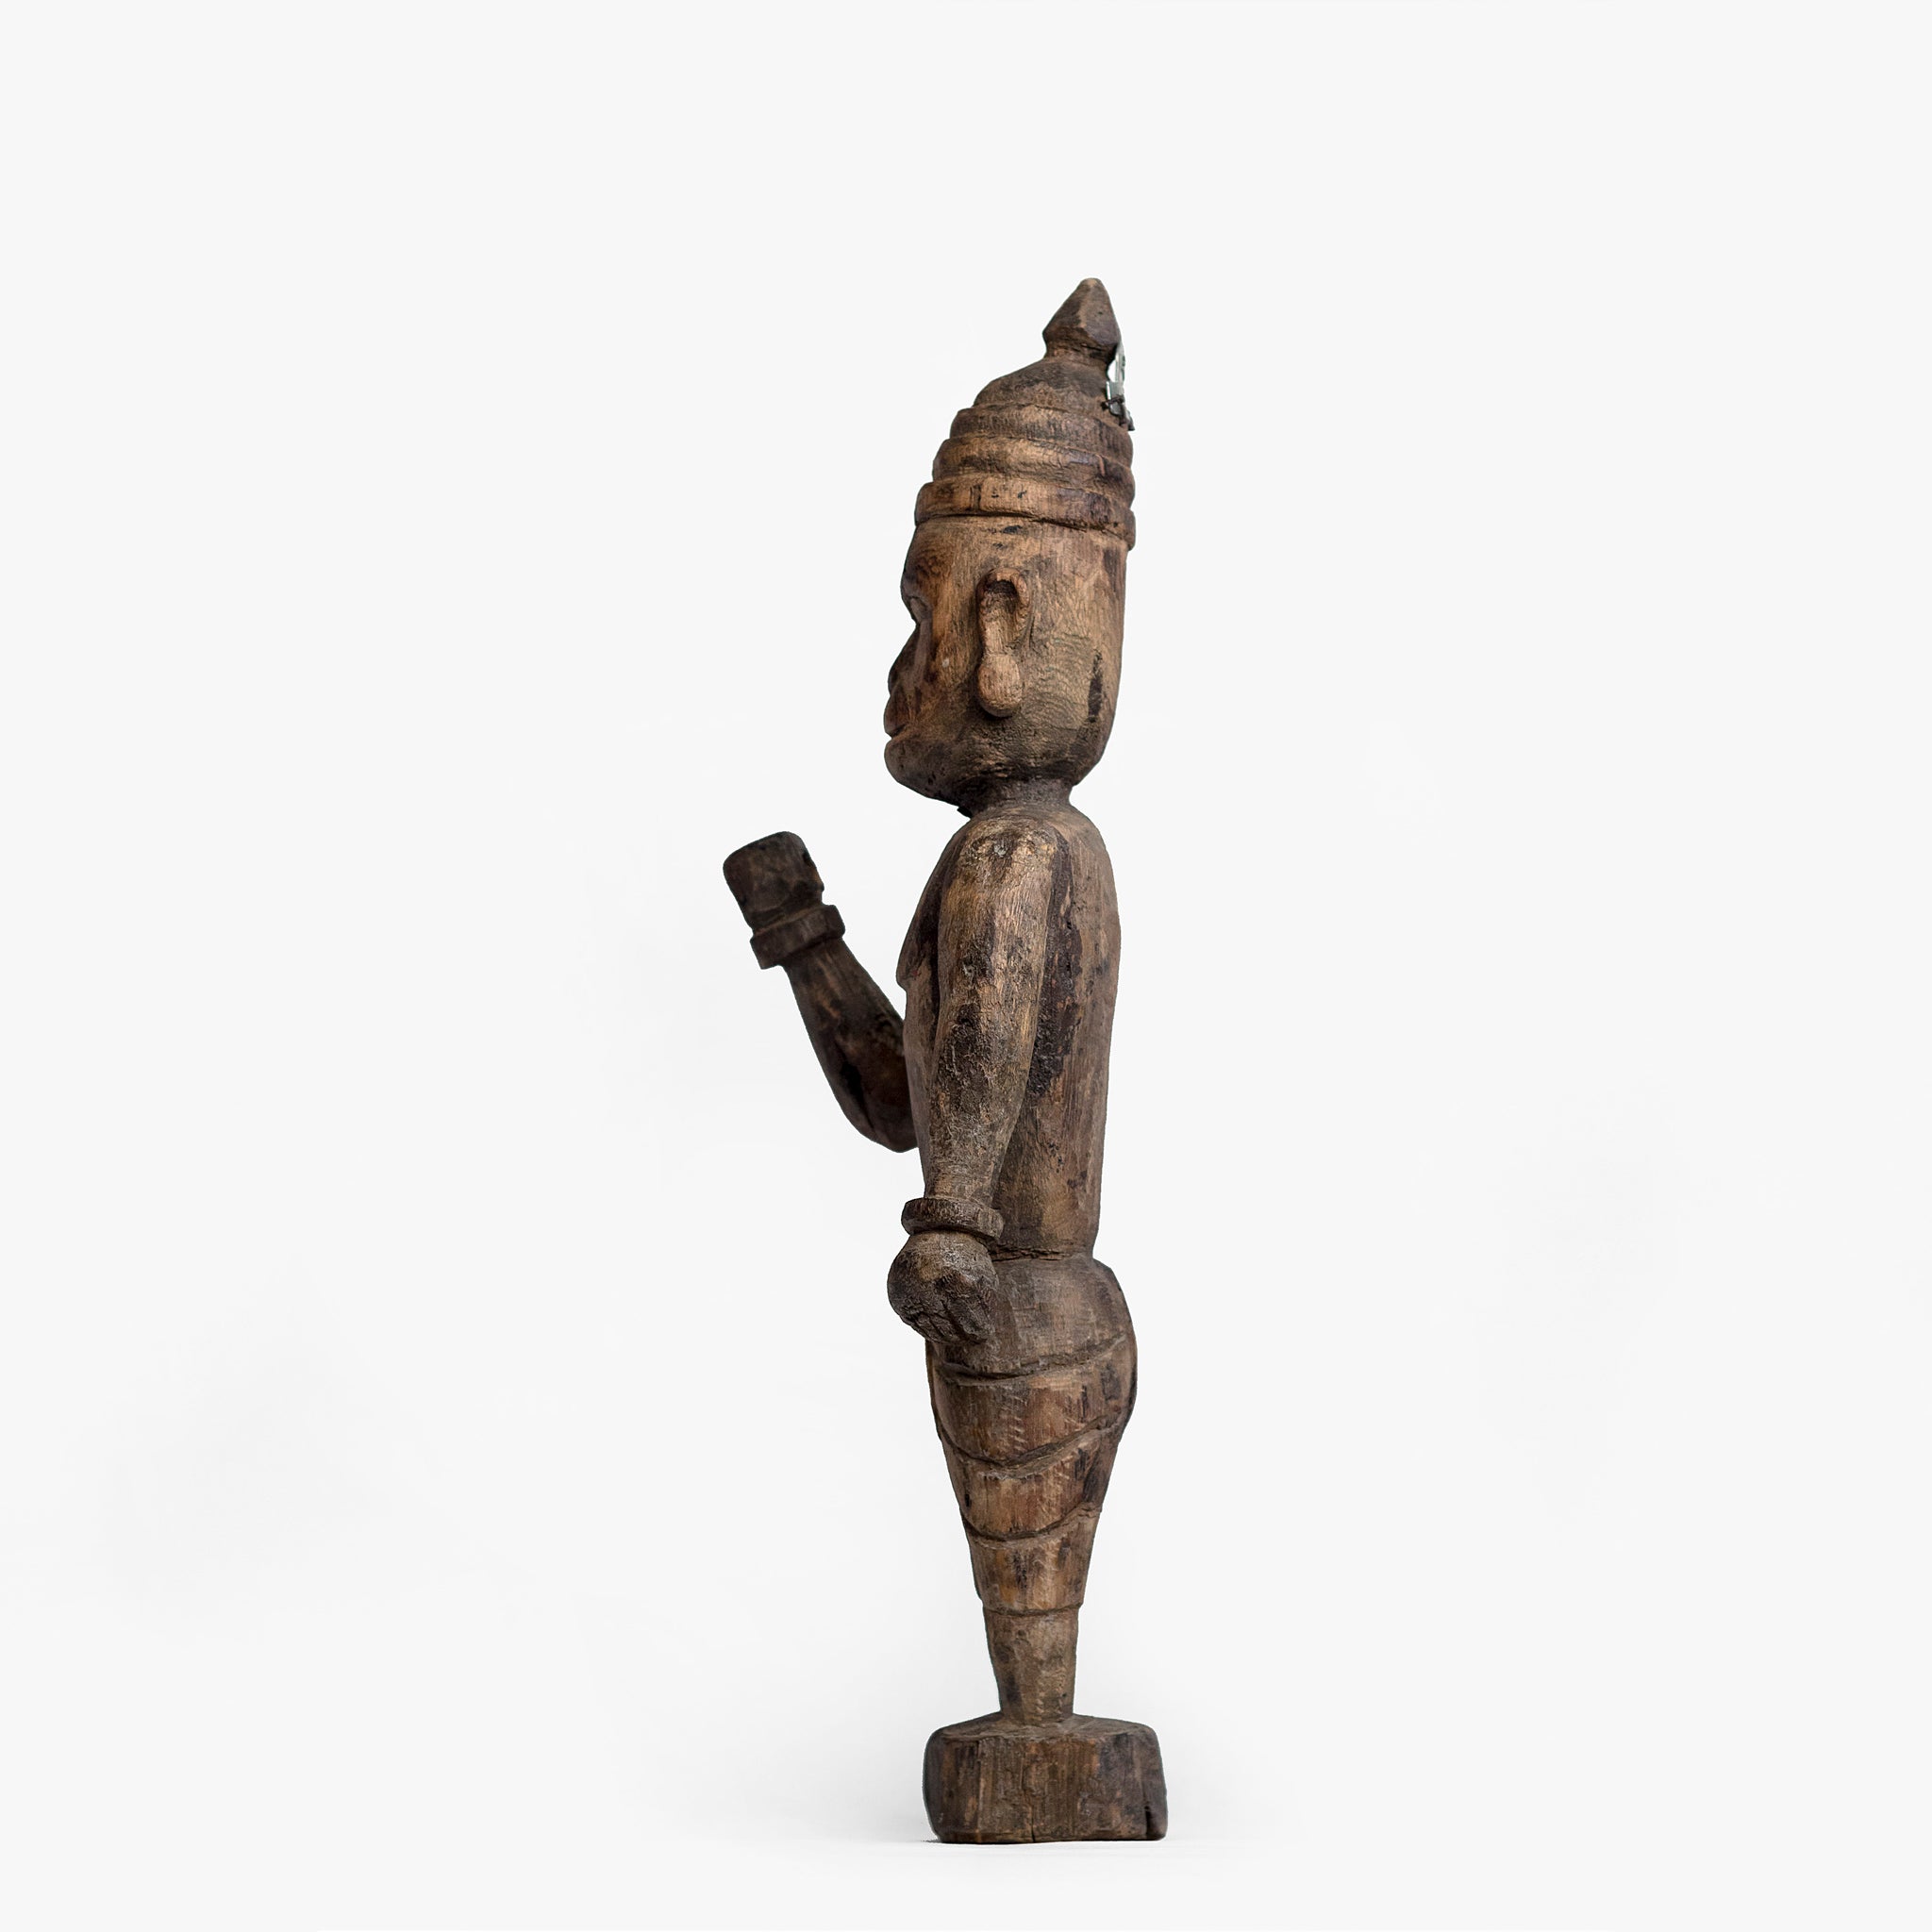  Antique wooden Idols